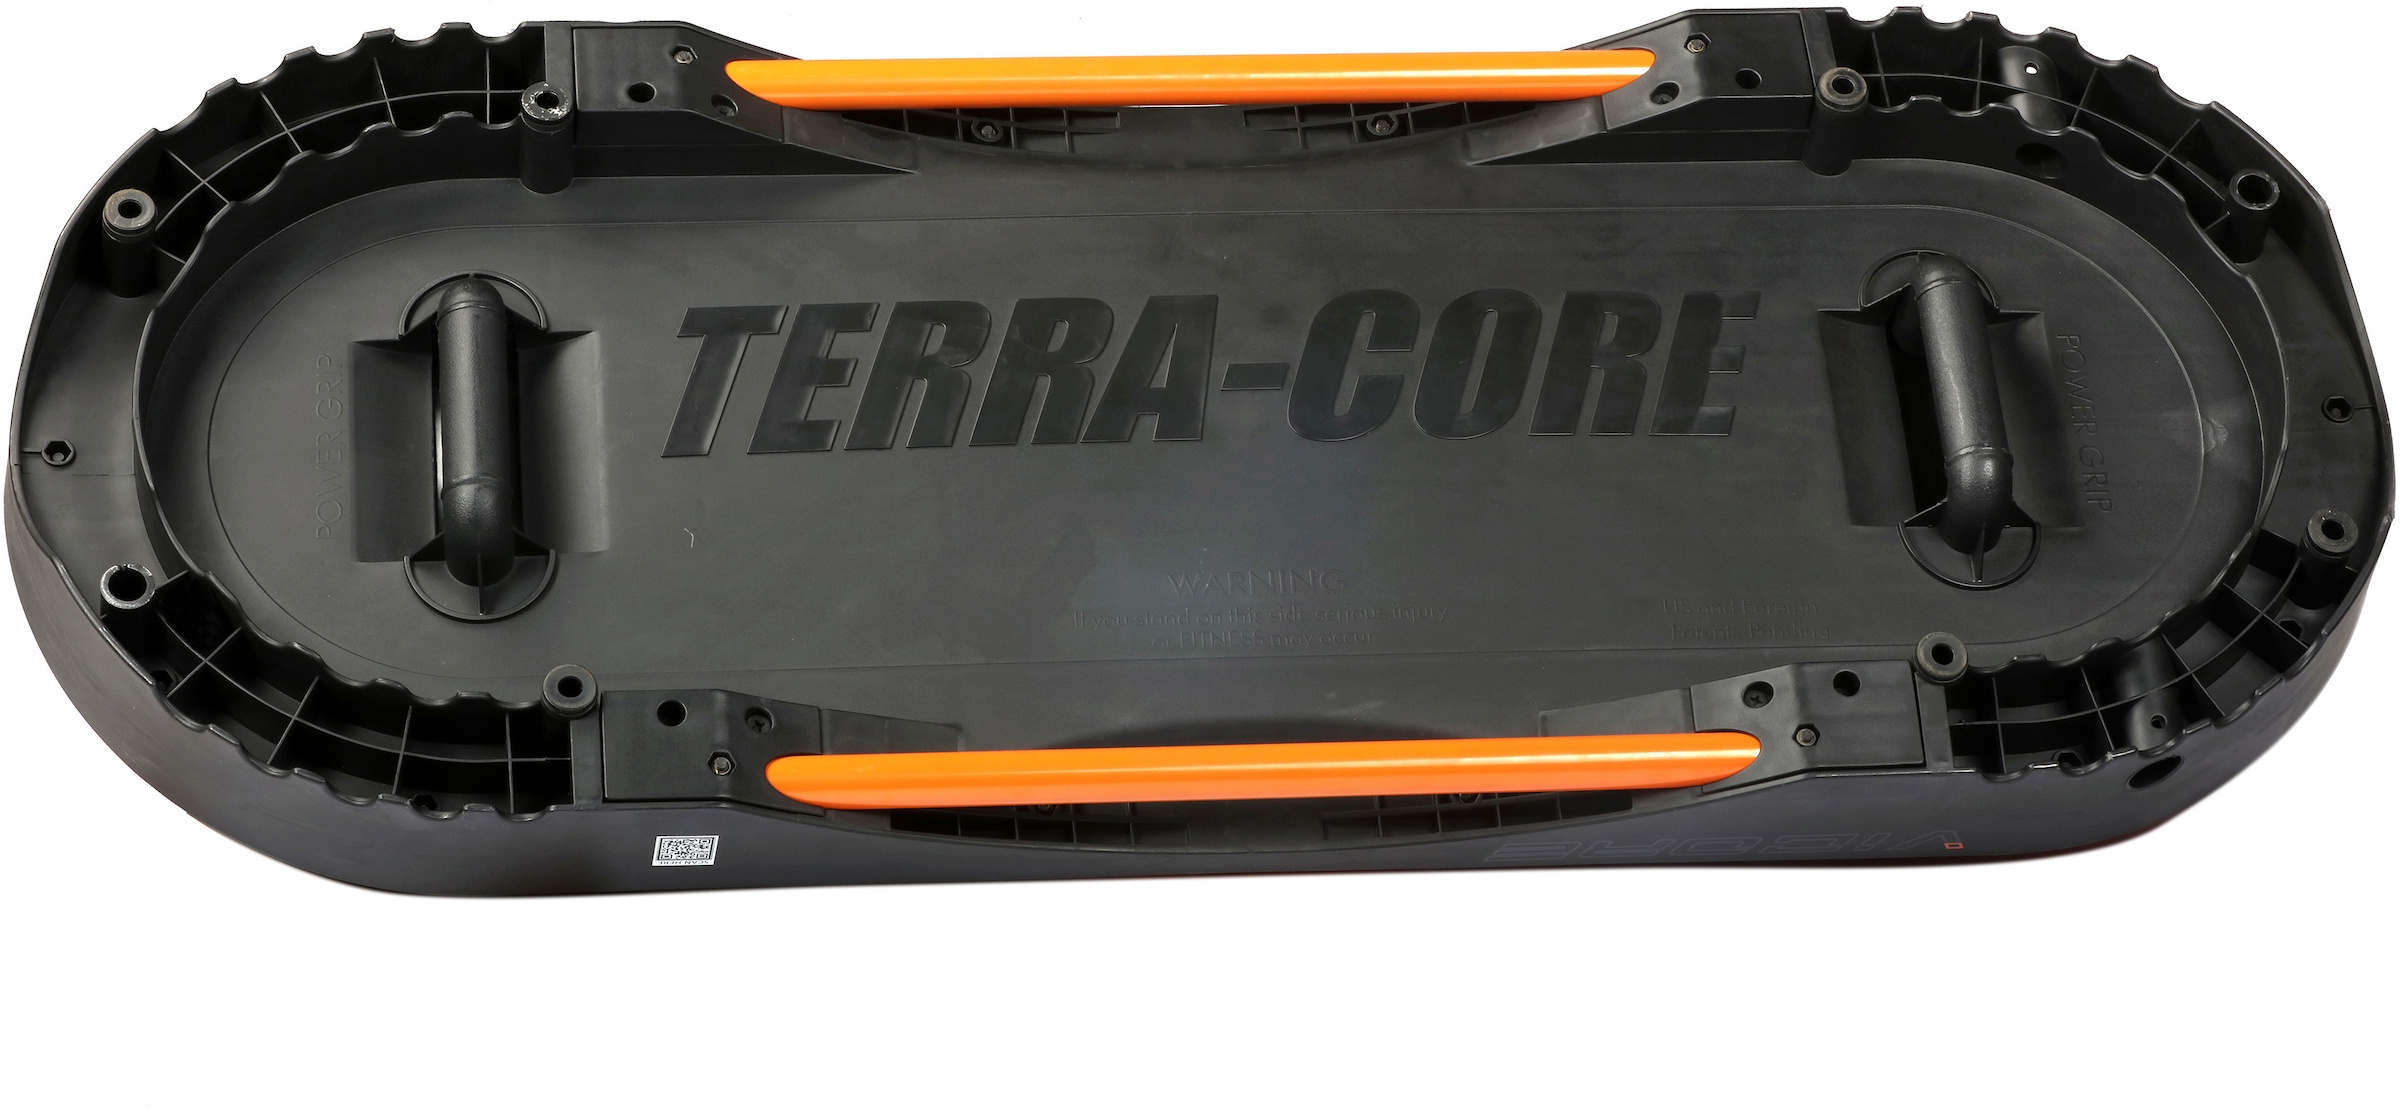 Universelle Core«, Board »Terra Luftpumpe), Terra Balancetrainer Workout Balance bei und Core (mit Bench, Stepp